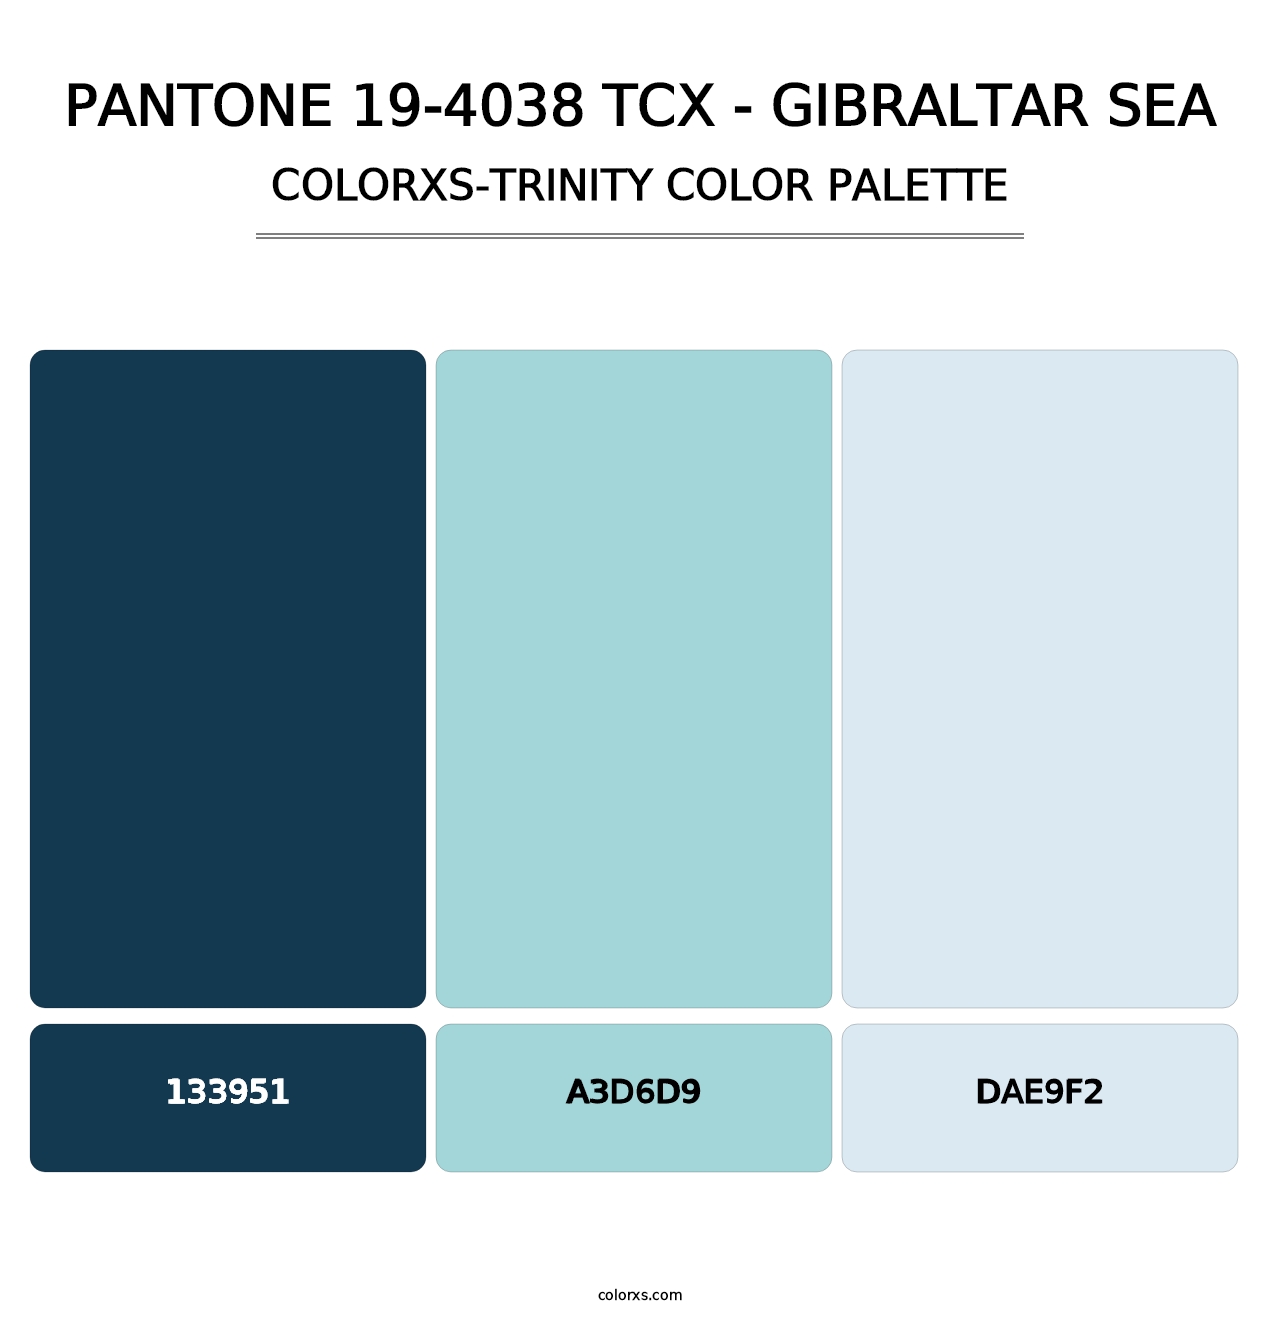 PANTONE 19-4038 TCX - Gibraltar Sea - Colorxs Trinity Palette